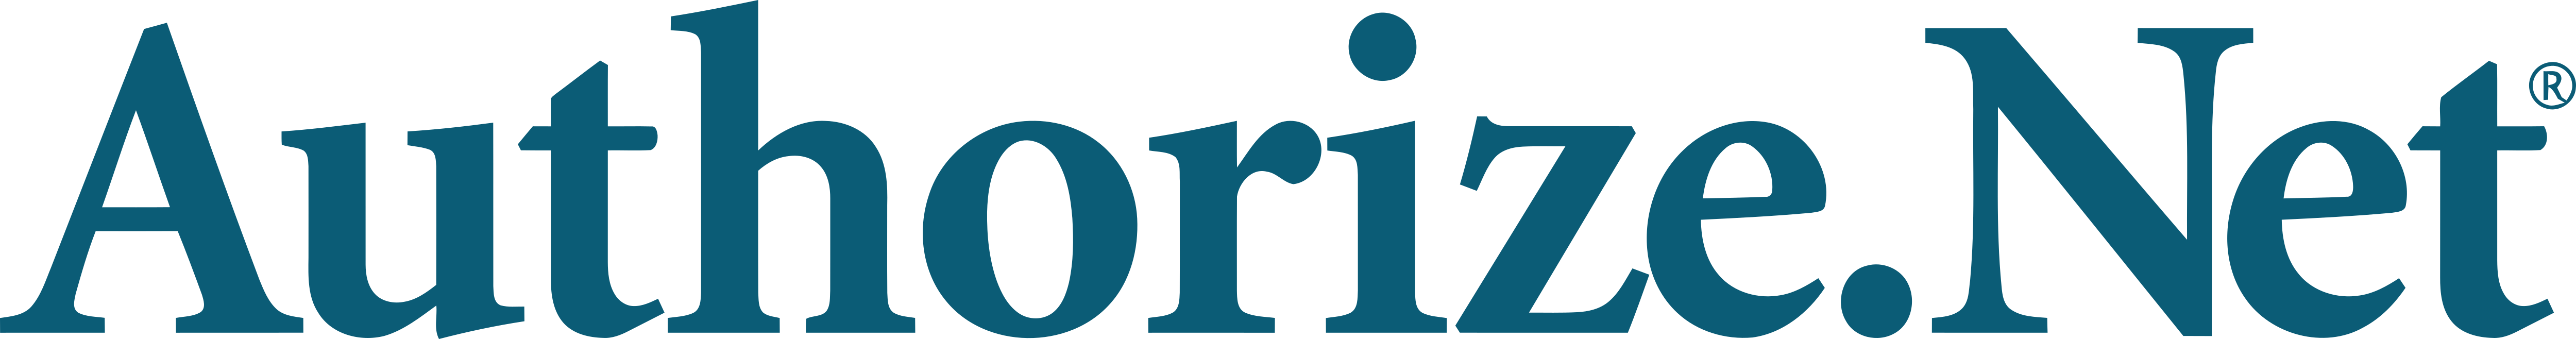 Authorize.net_Logo.png